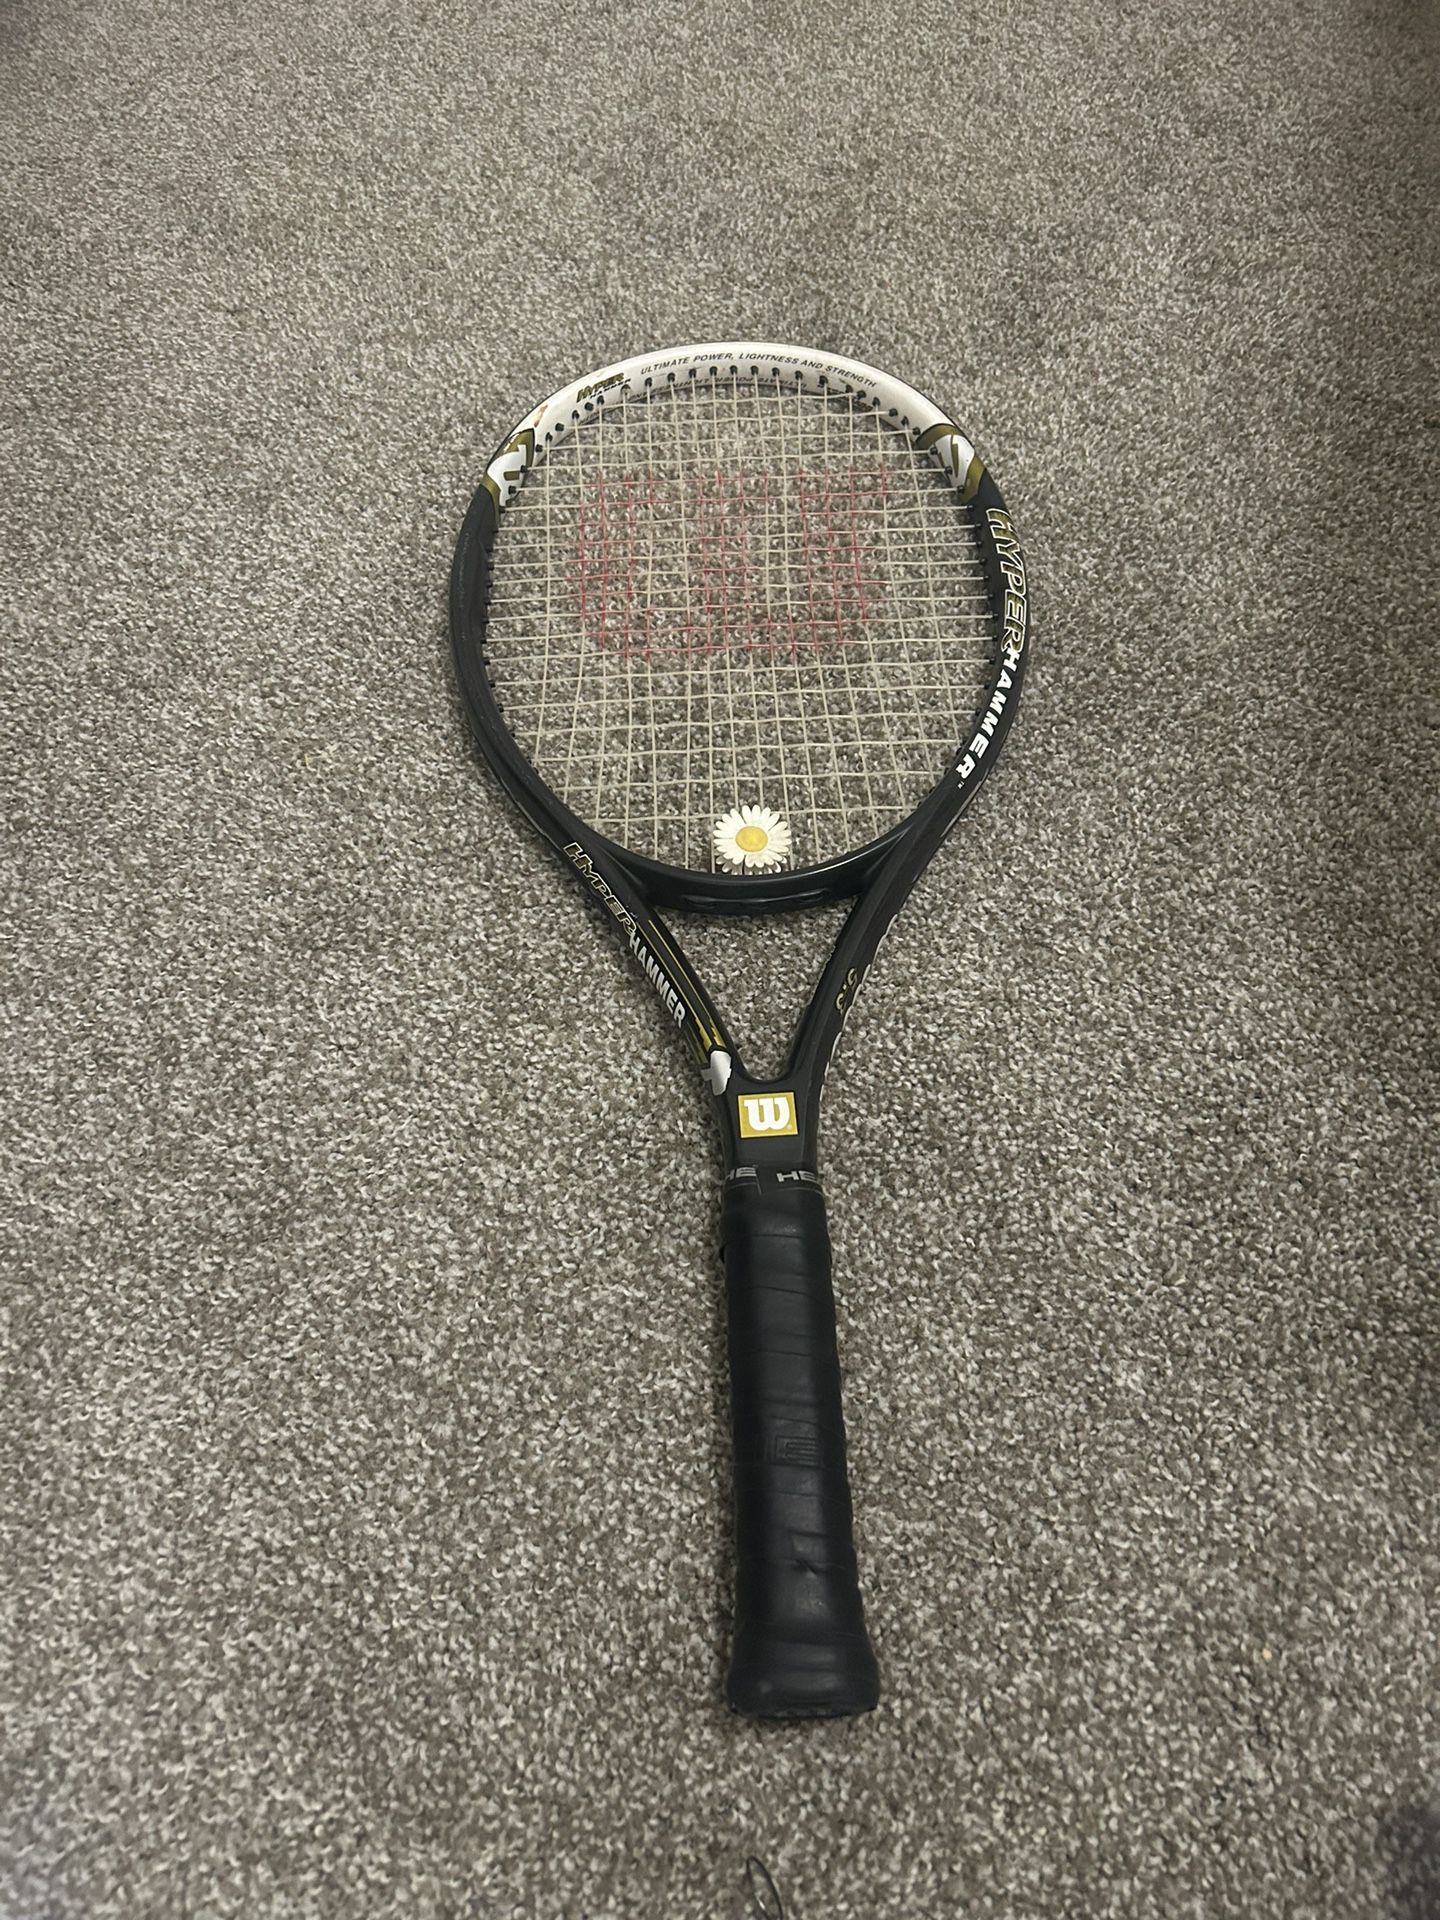 used wilson carbon fiber tennis racket 